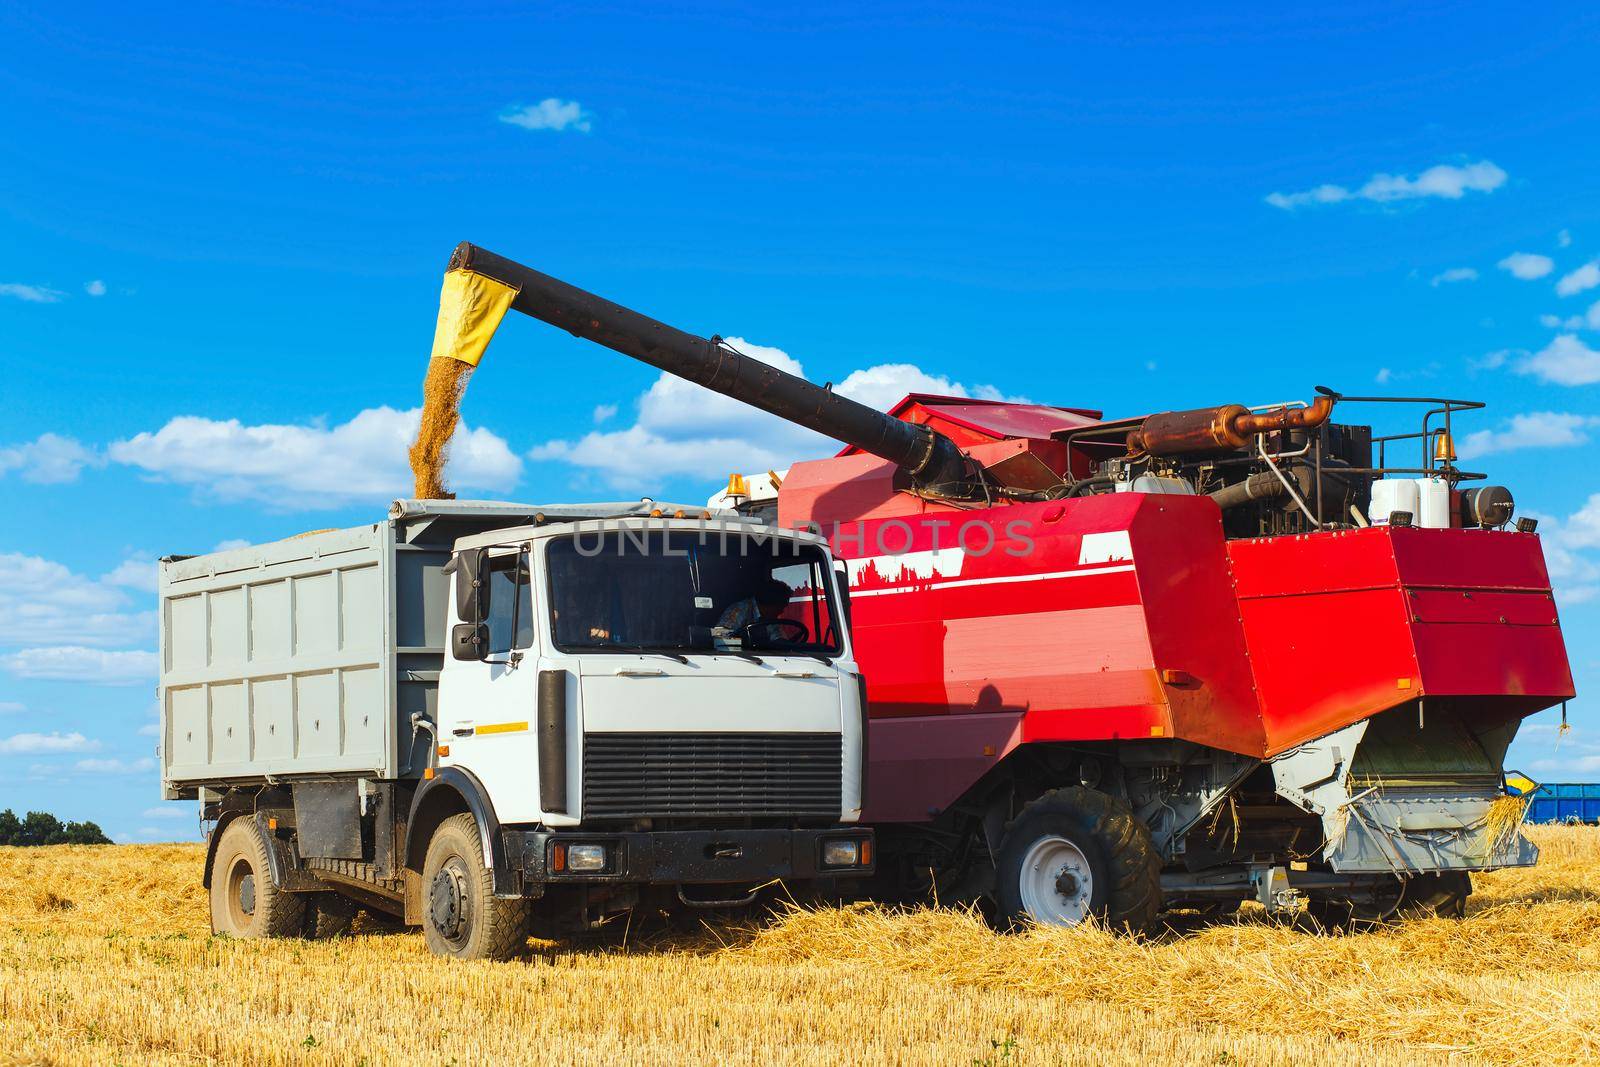 The harvester is bulk harvested grain into the truck